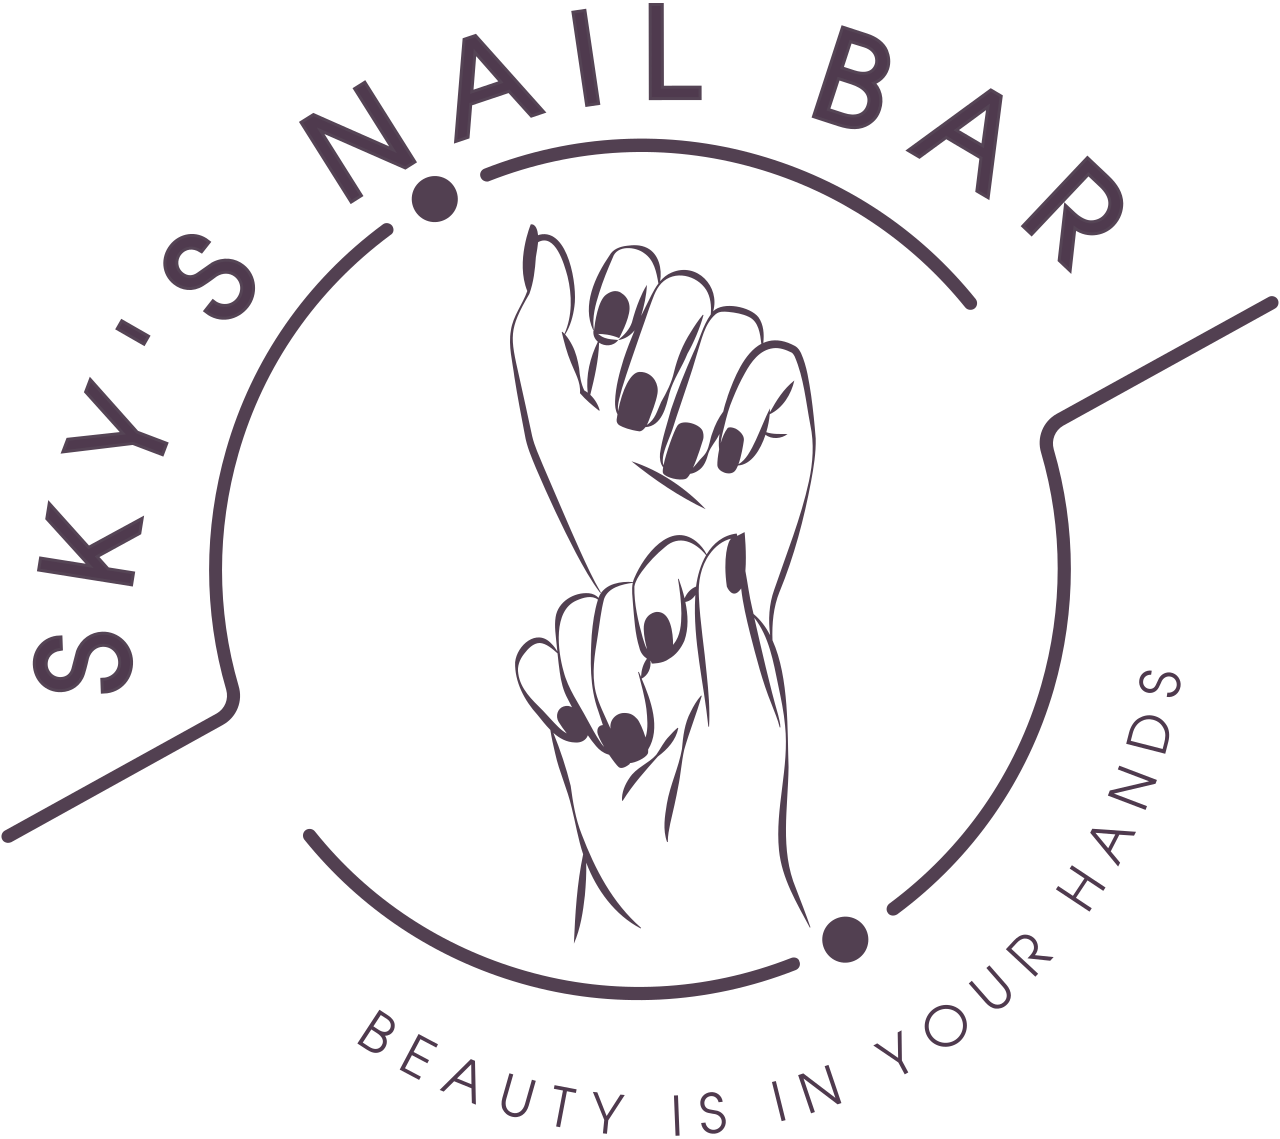 SKY'S NAIL BAR's logo